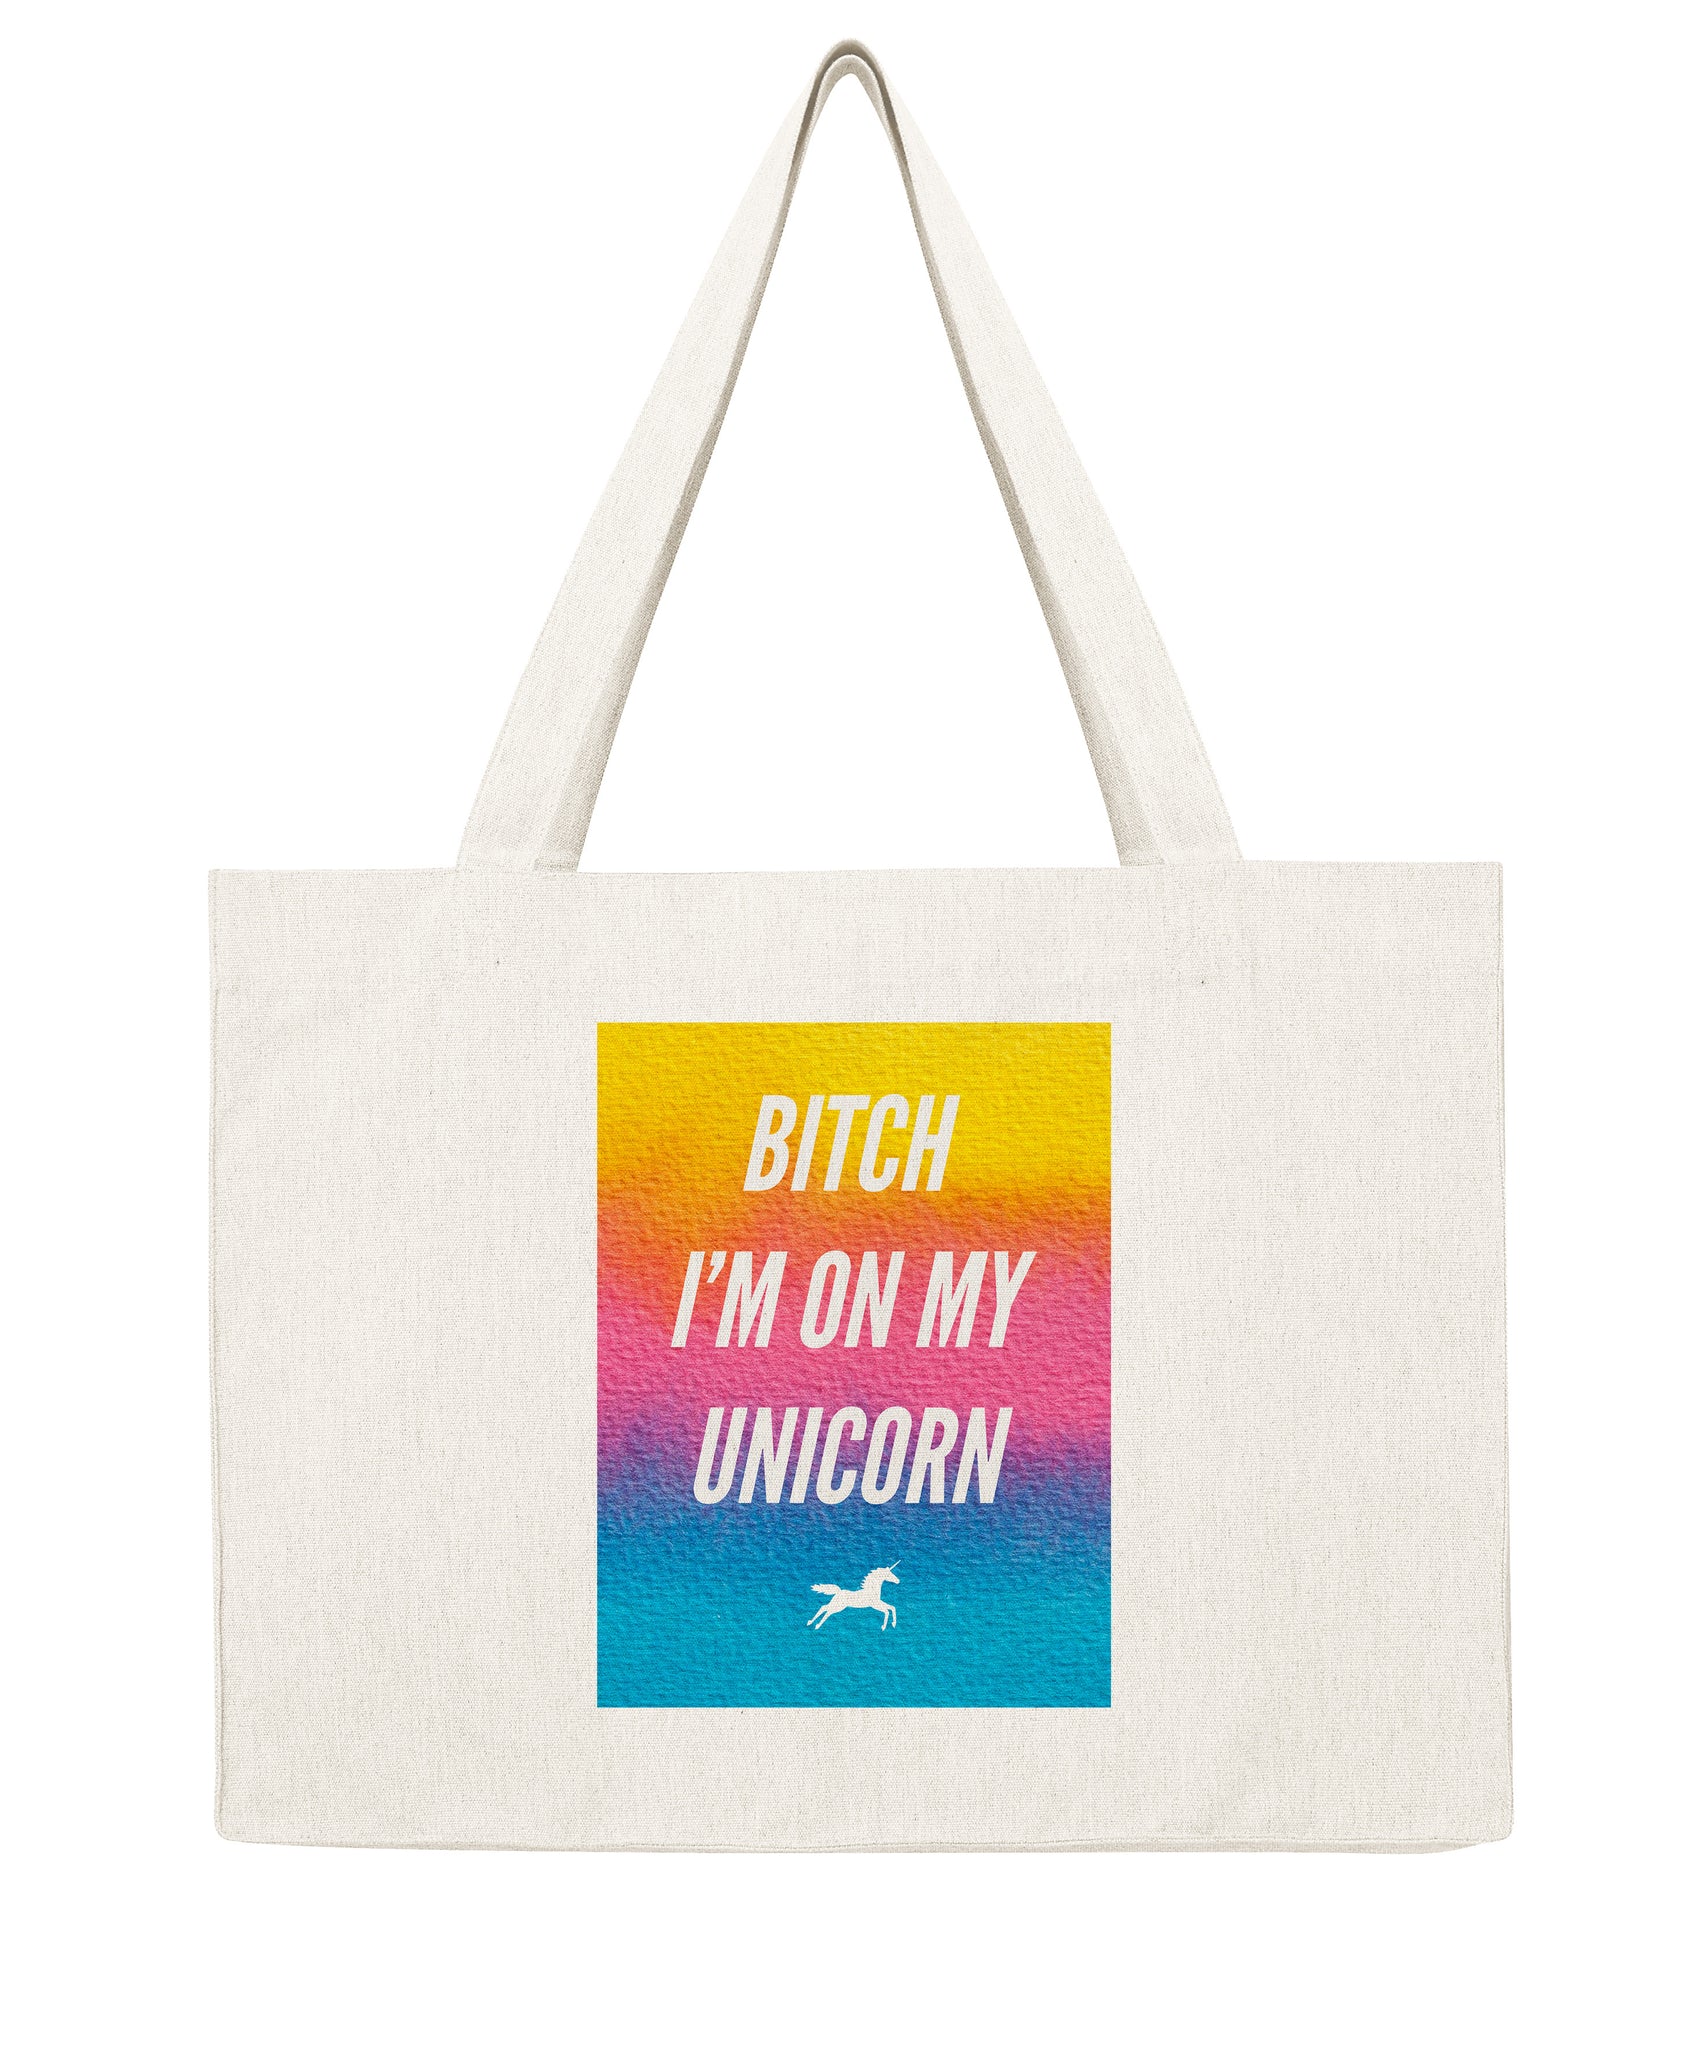 Bitch I'm on my unicorn - Shopping bag-Sacs-Atelier Amelot